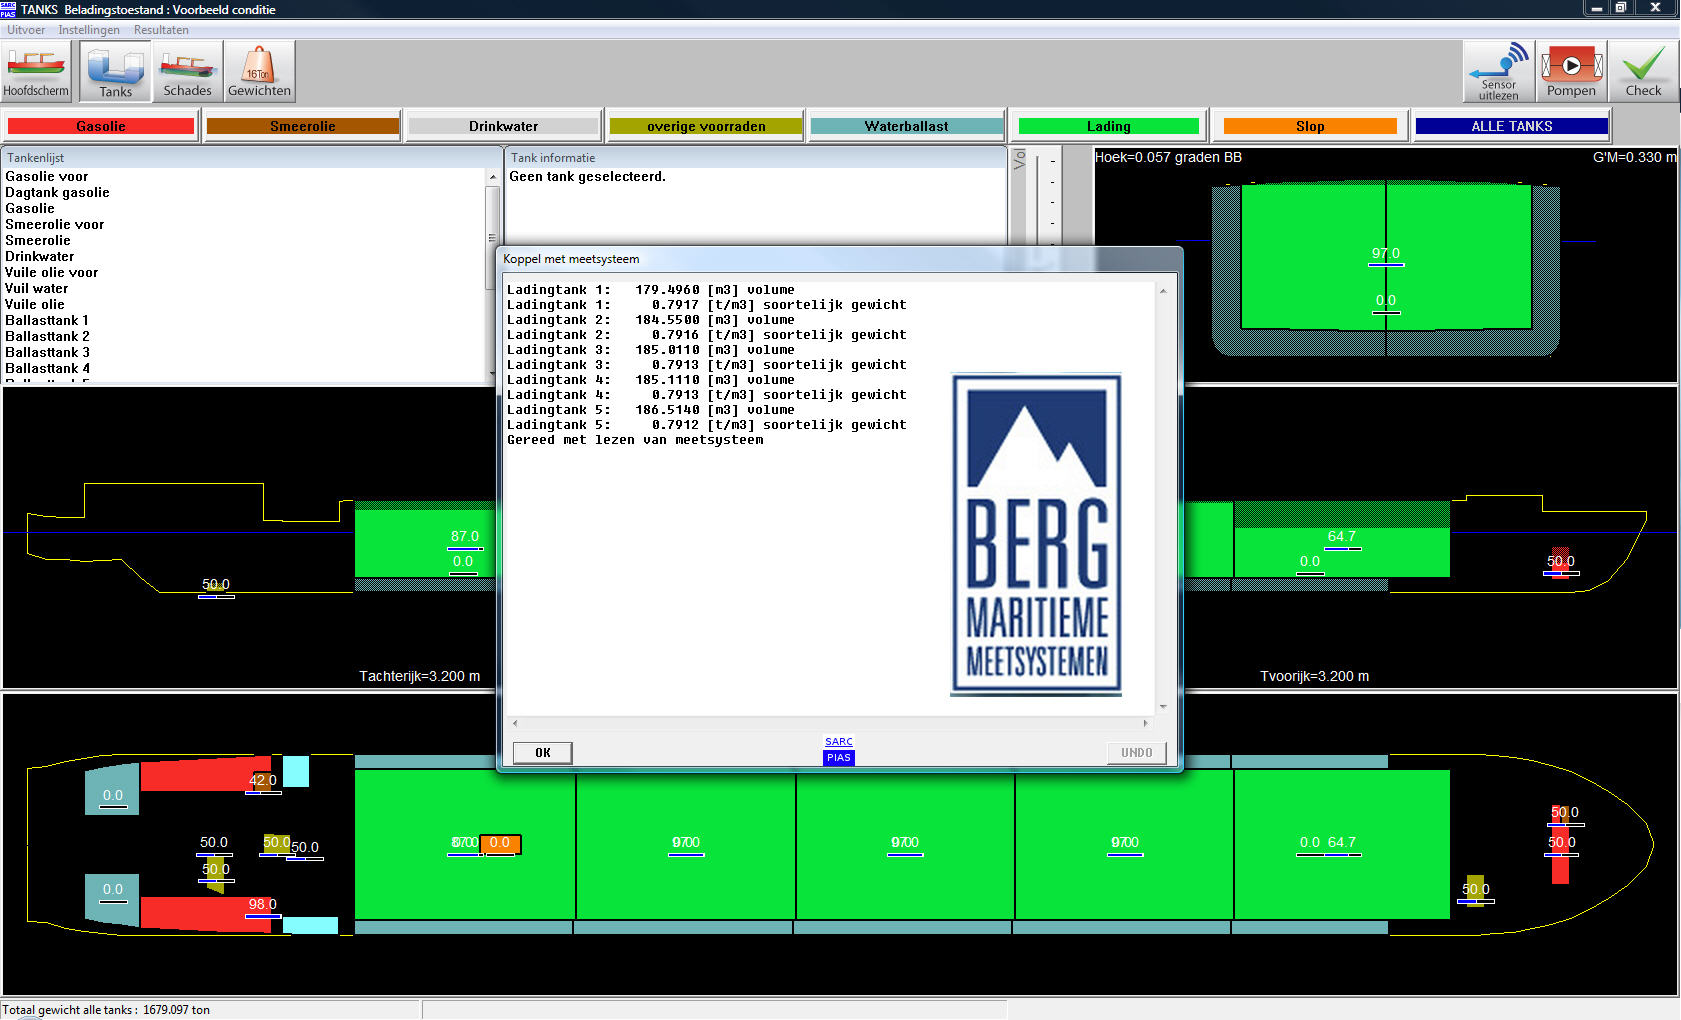 interface with BERG Maritieme Meetsystemen